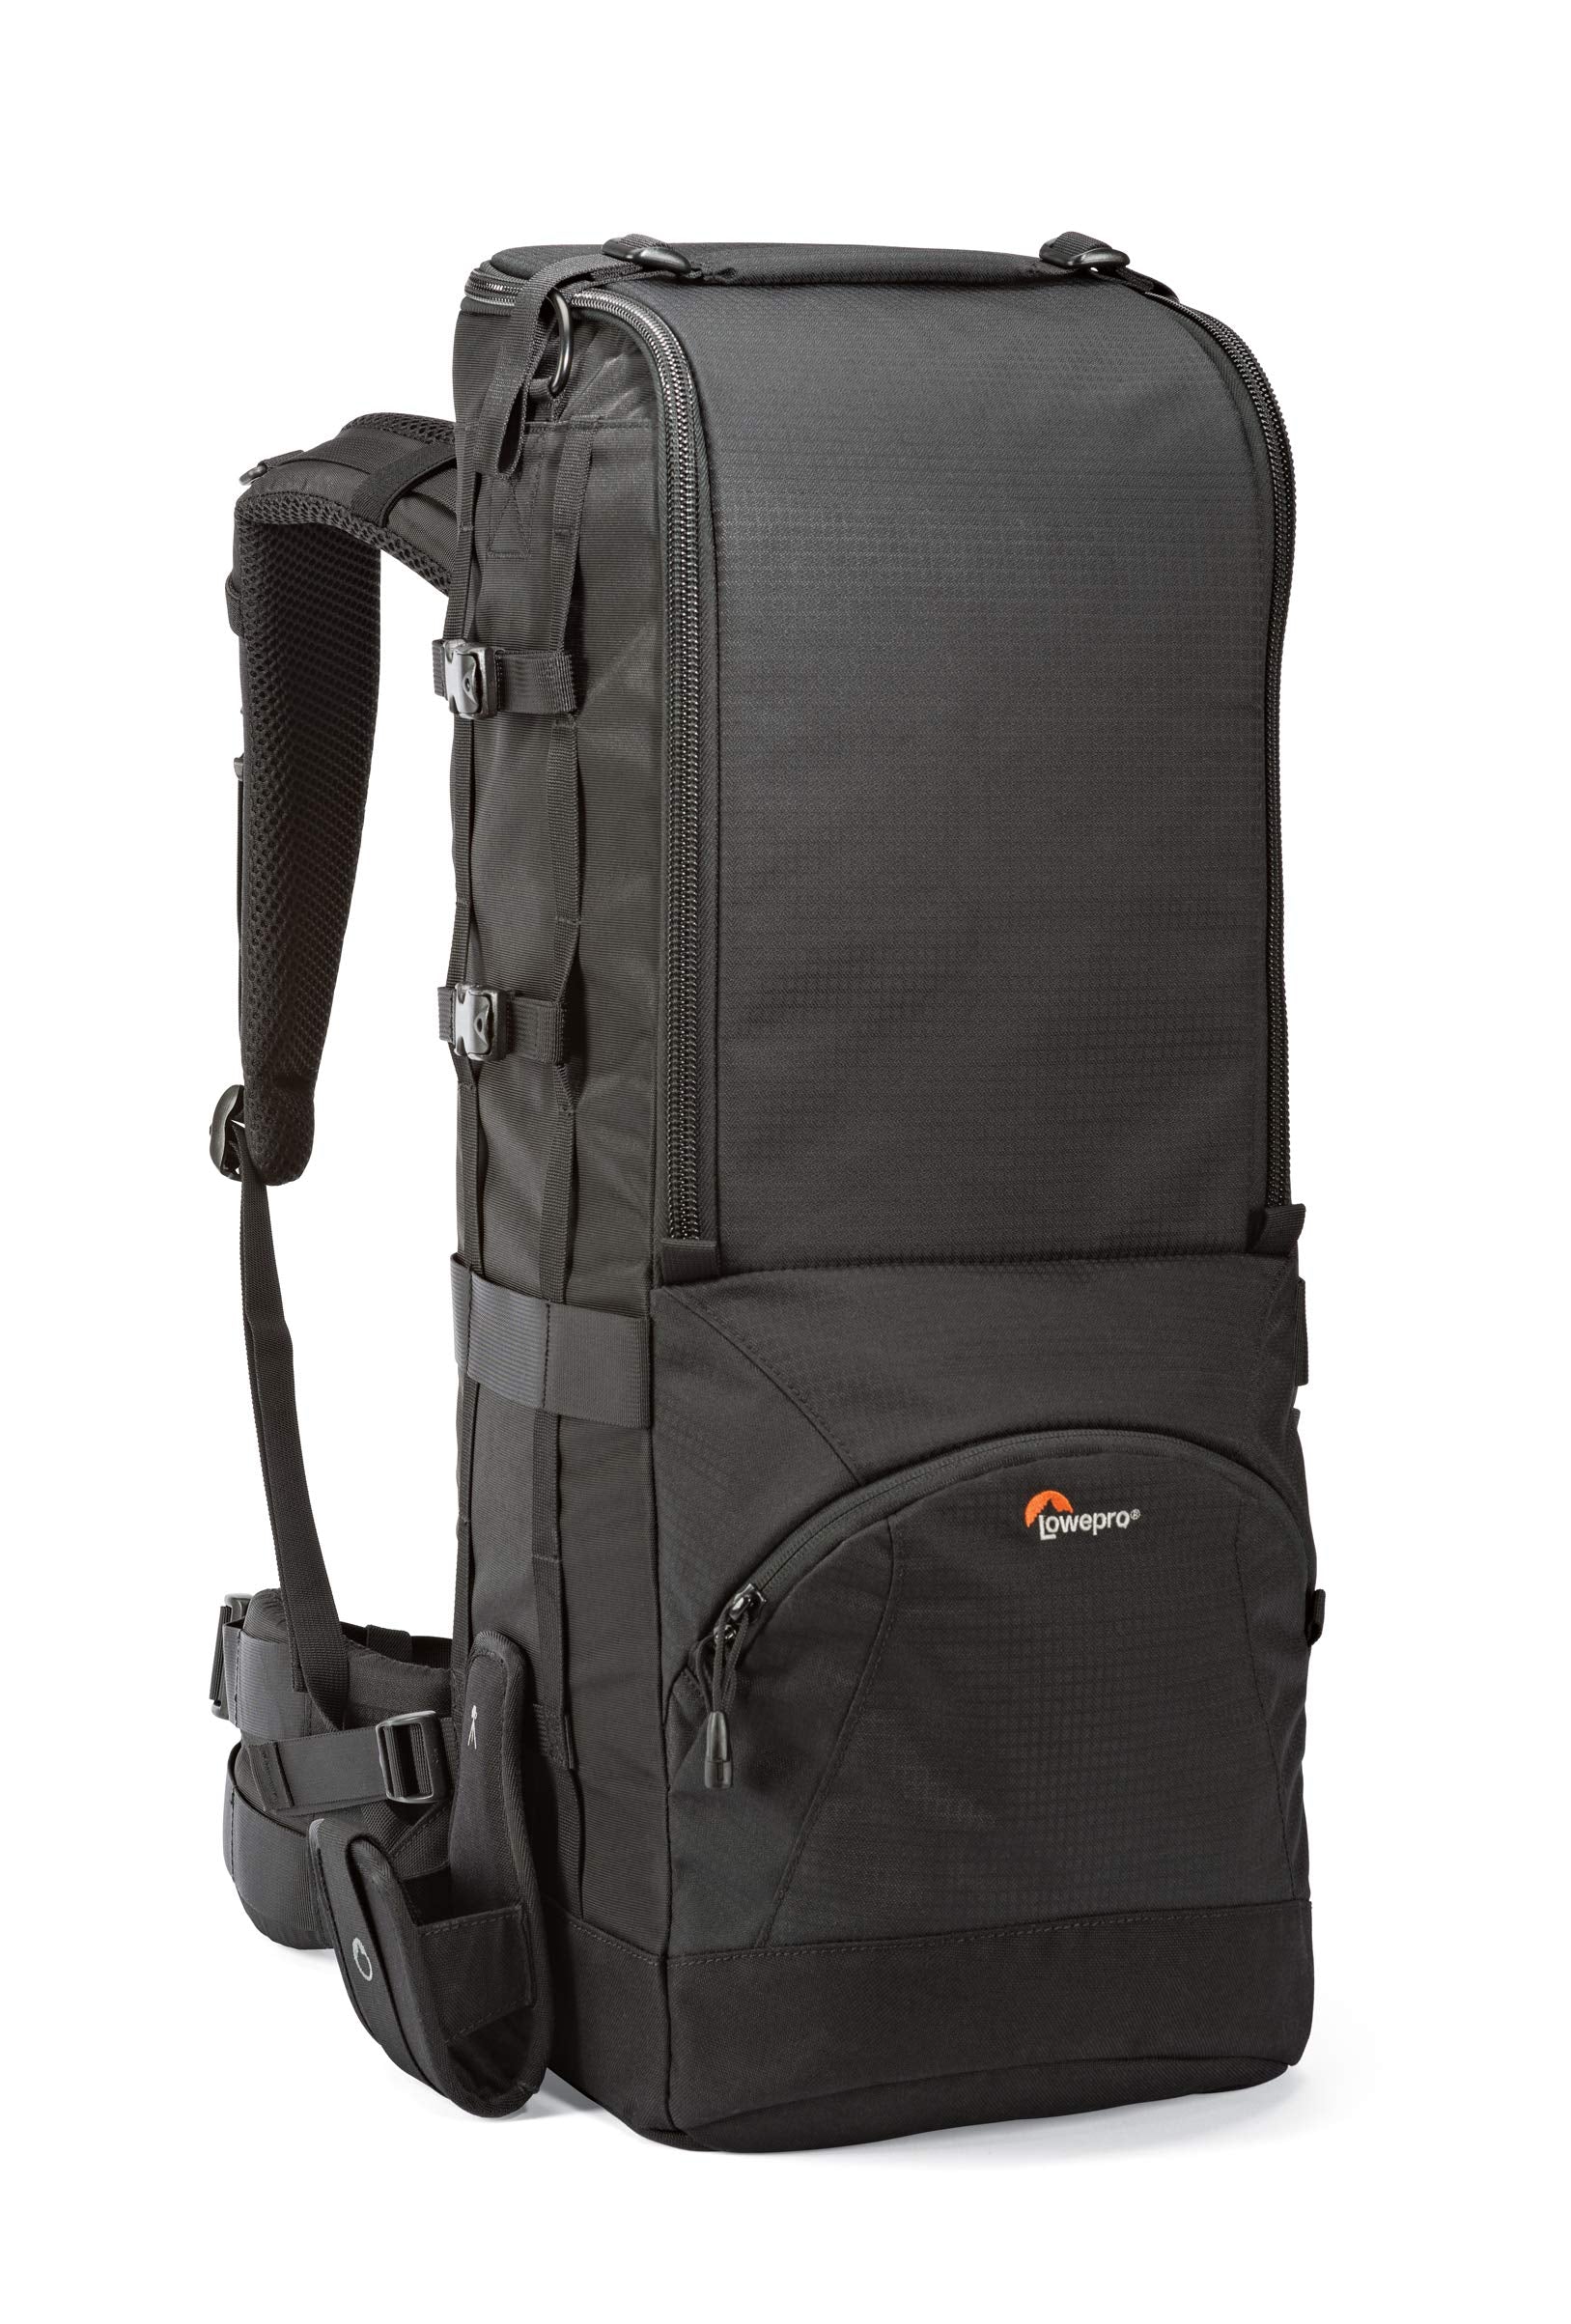 Lens Trekker 600 AW III Telephoto Lens Backpack from Lowepro ? Large Capacity Backpacking Bag for Long Lenses and Camera